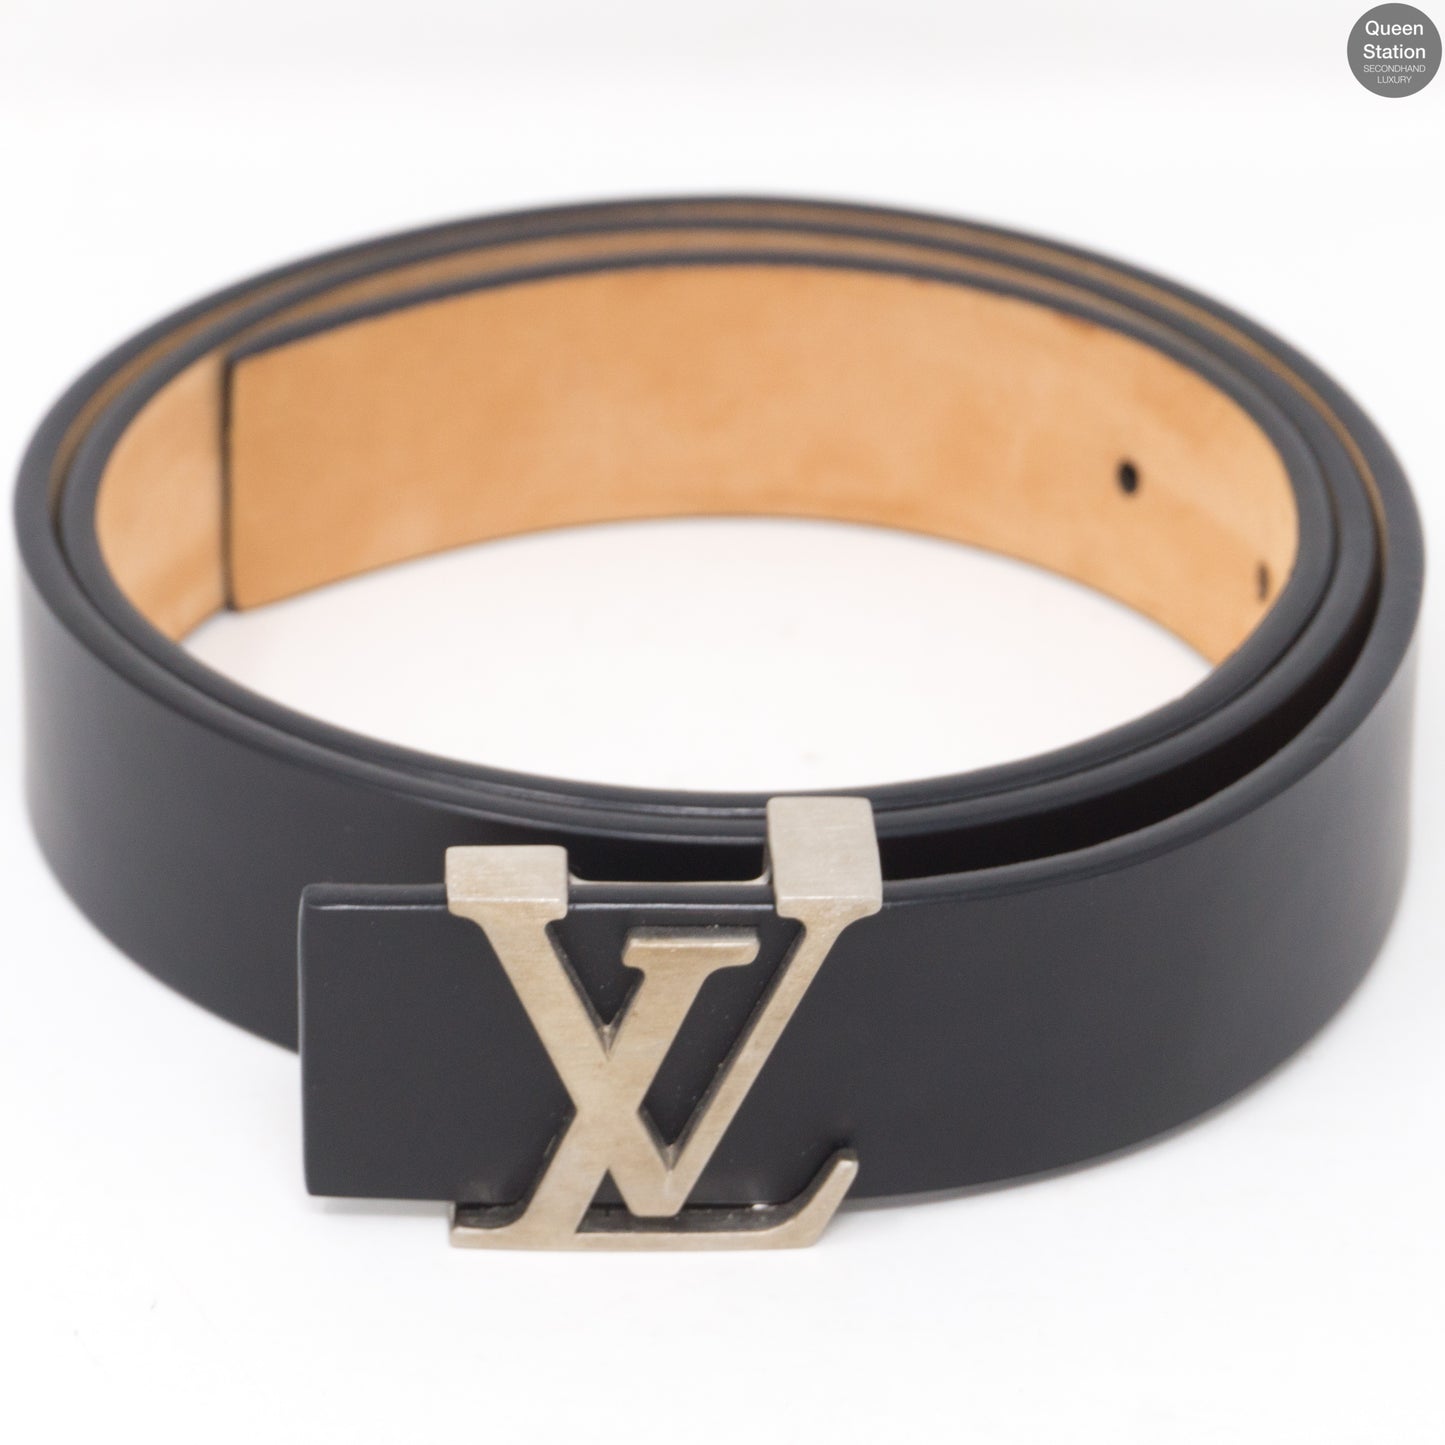 Louis Vuitton – Initiales Studded Belt 85 cm Black Leather – Queen Station